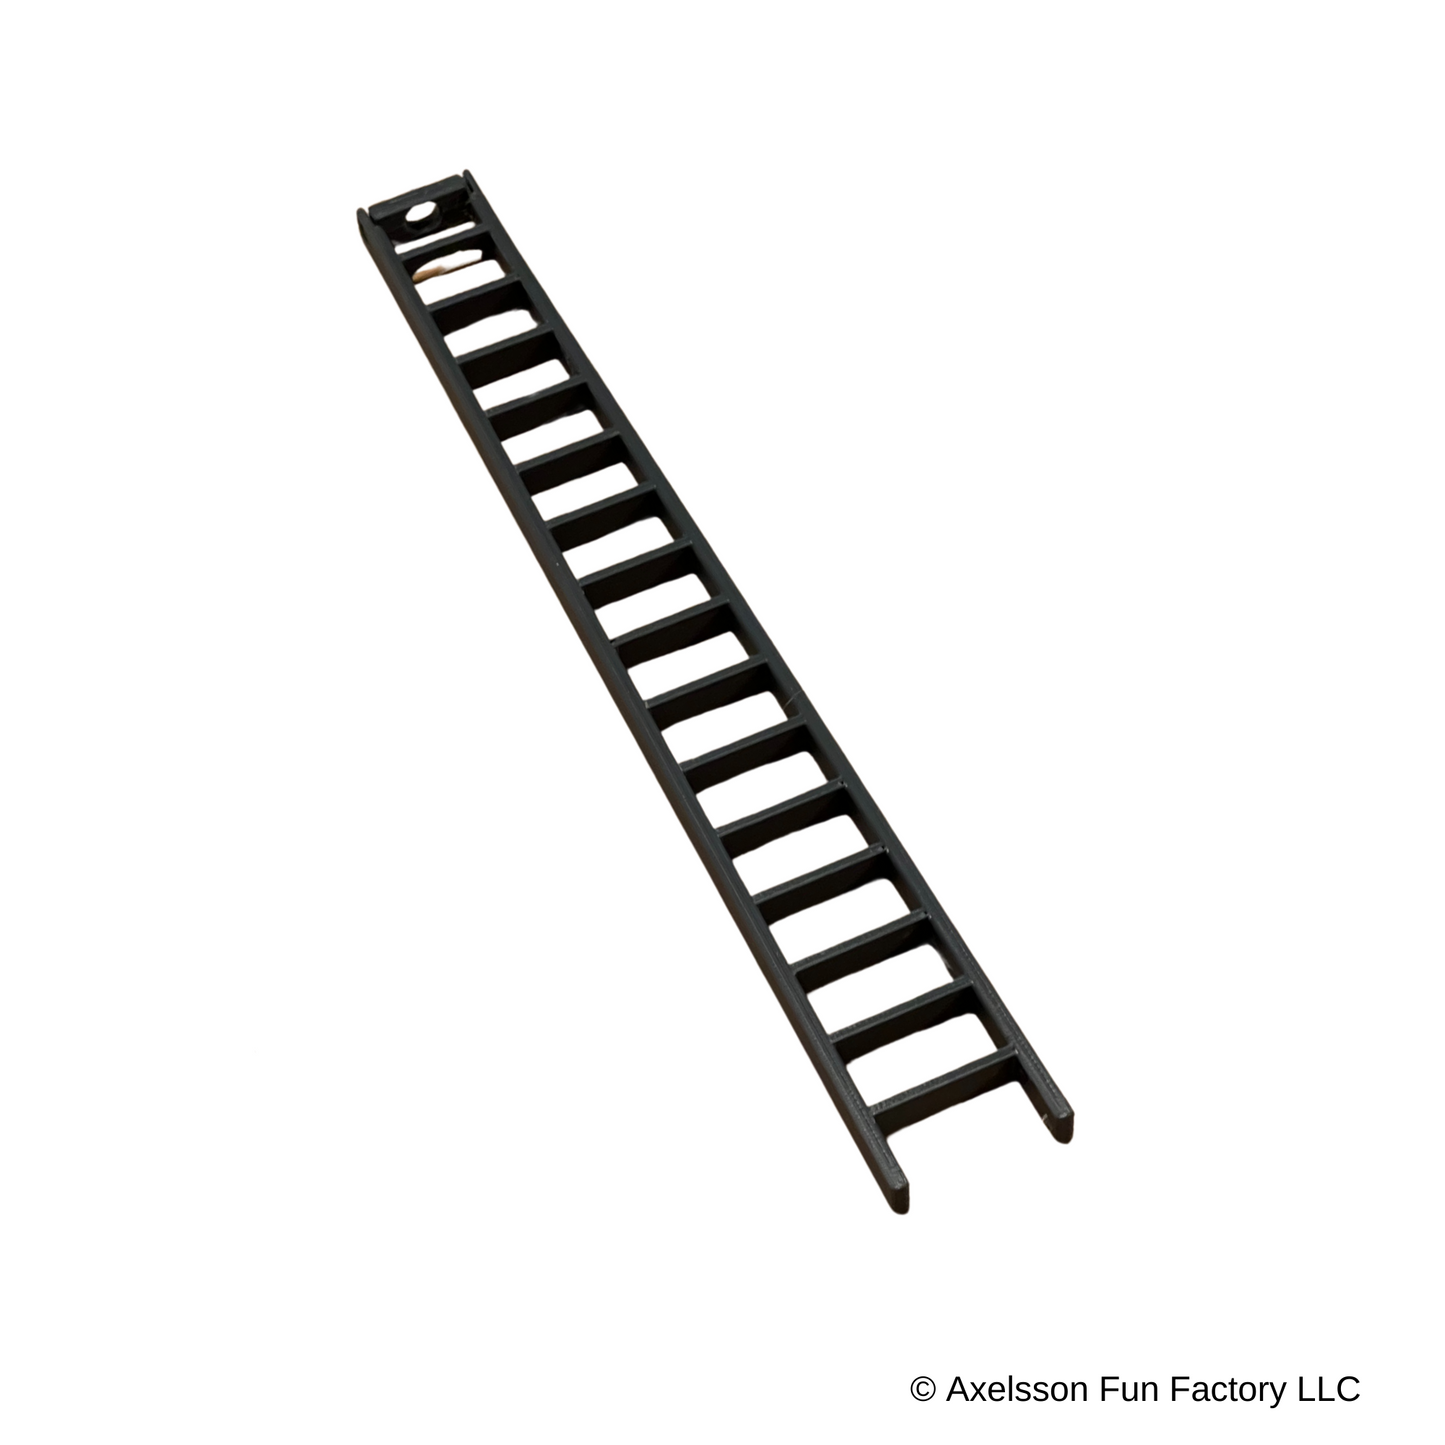 Ladder Charm